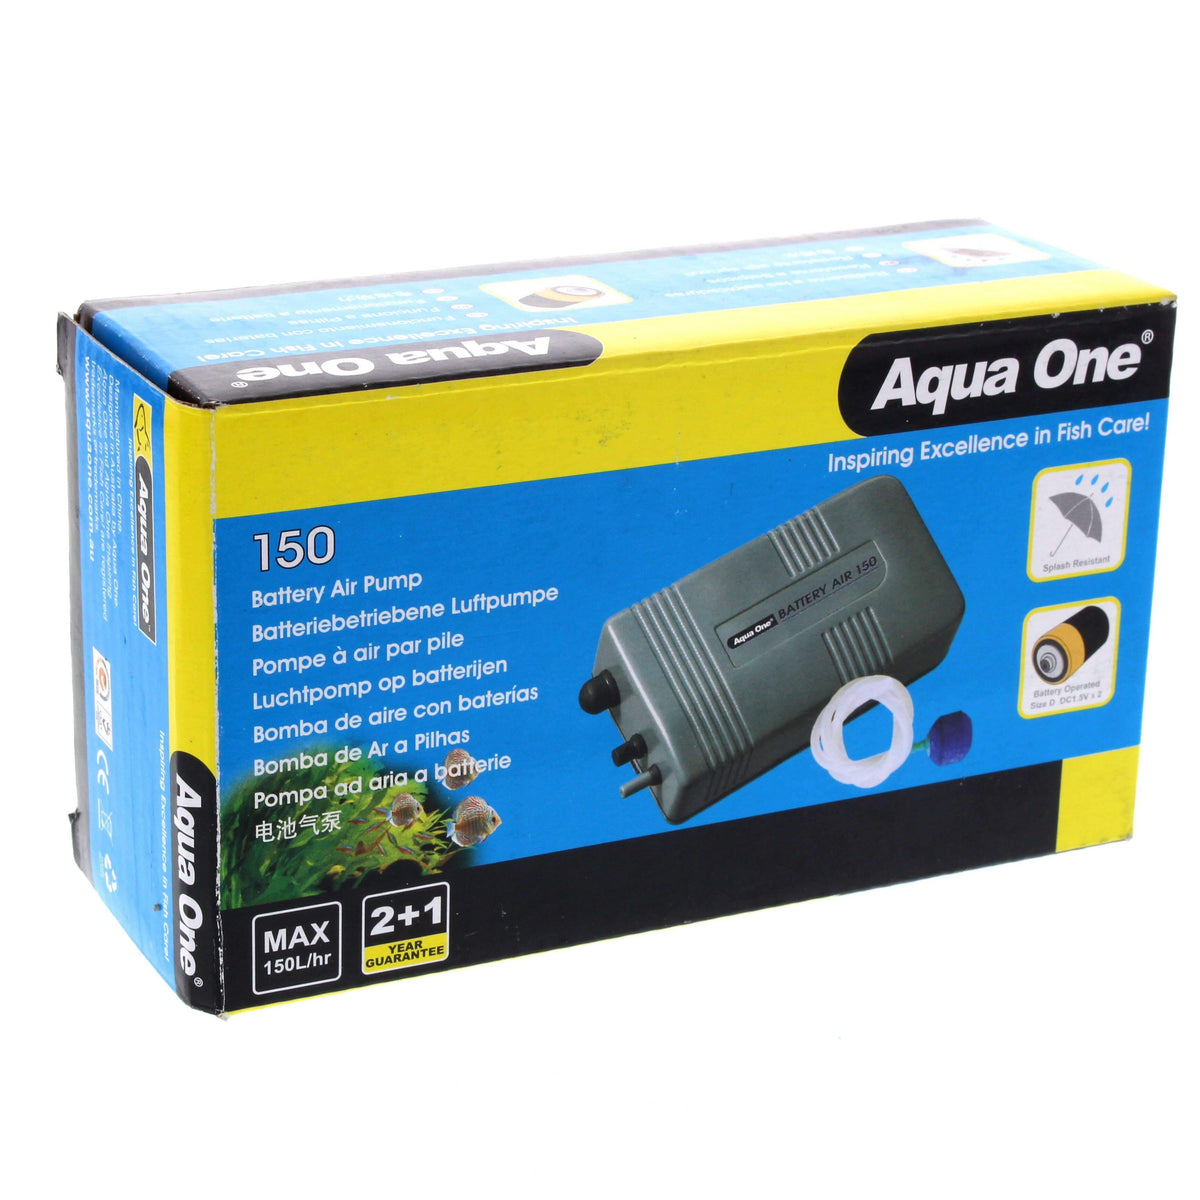 Aqua One Battery Air Pump 150 Splash Resistant